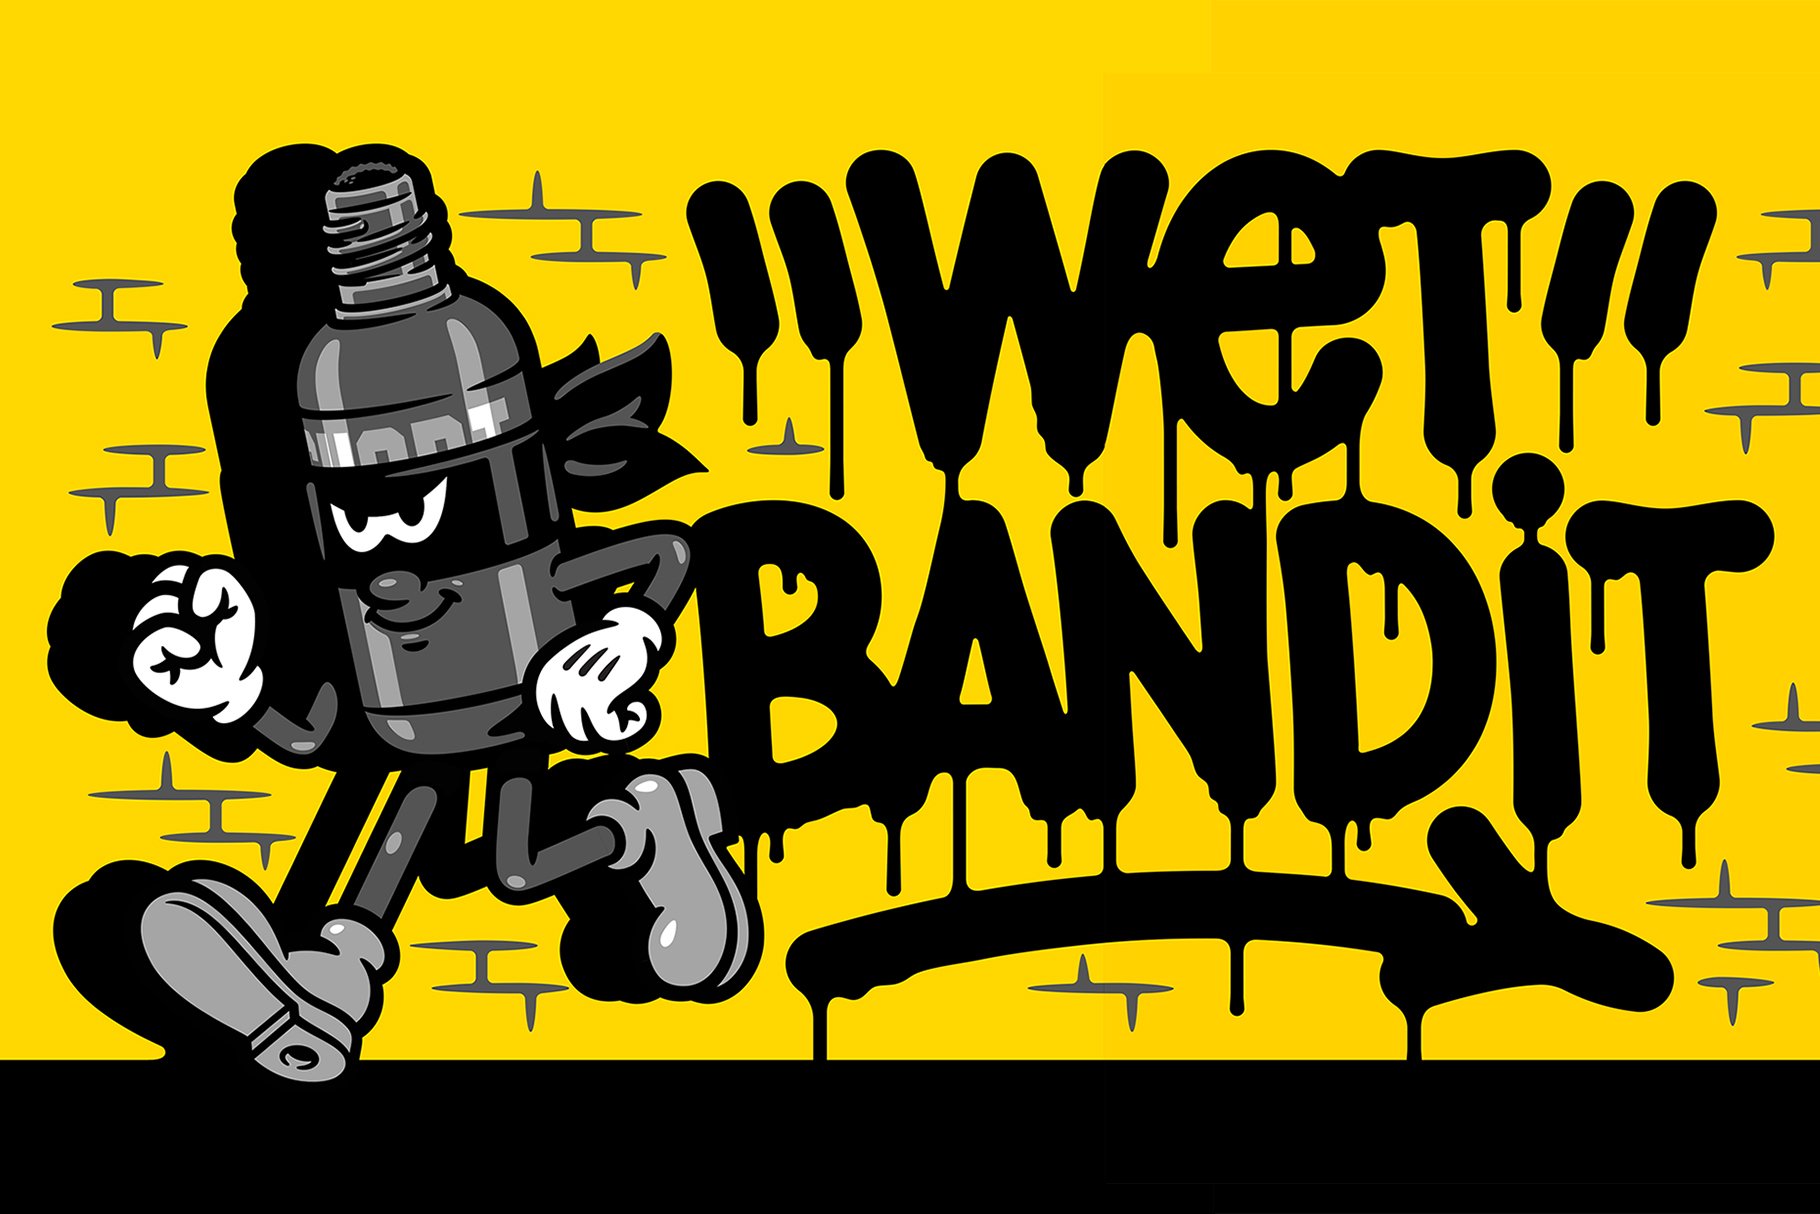 Wet Bandit Font cover image.